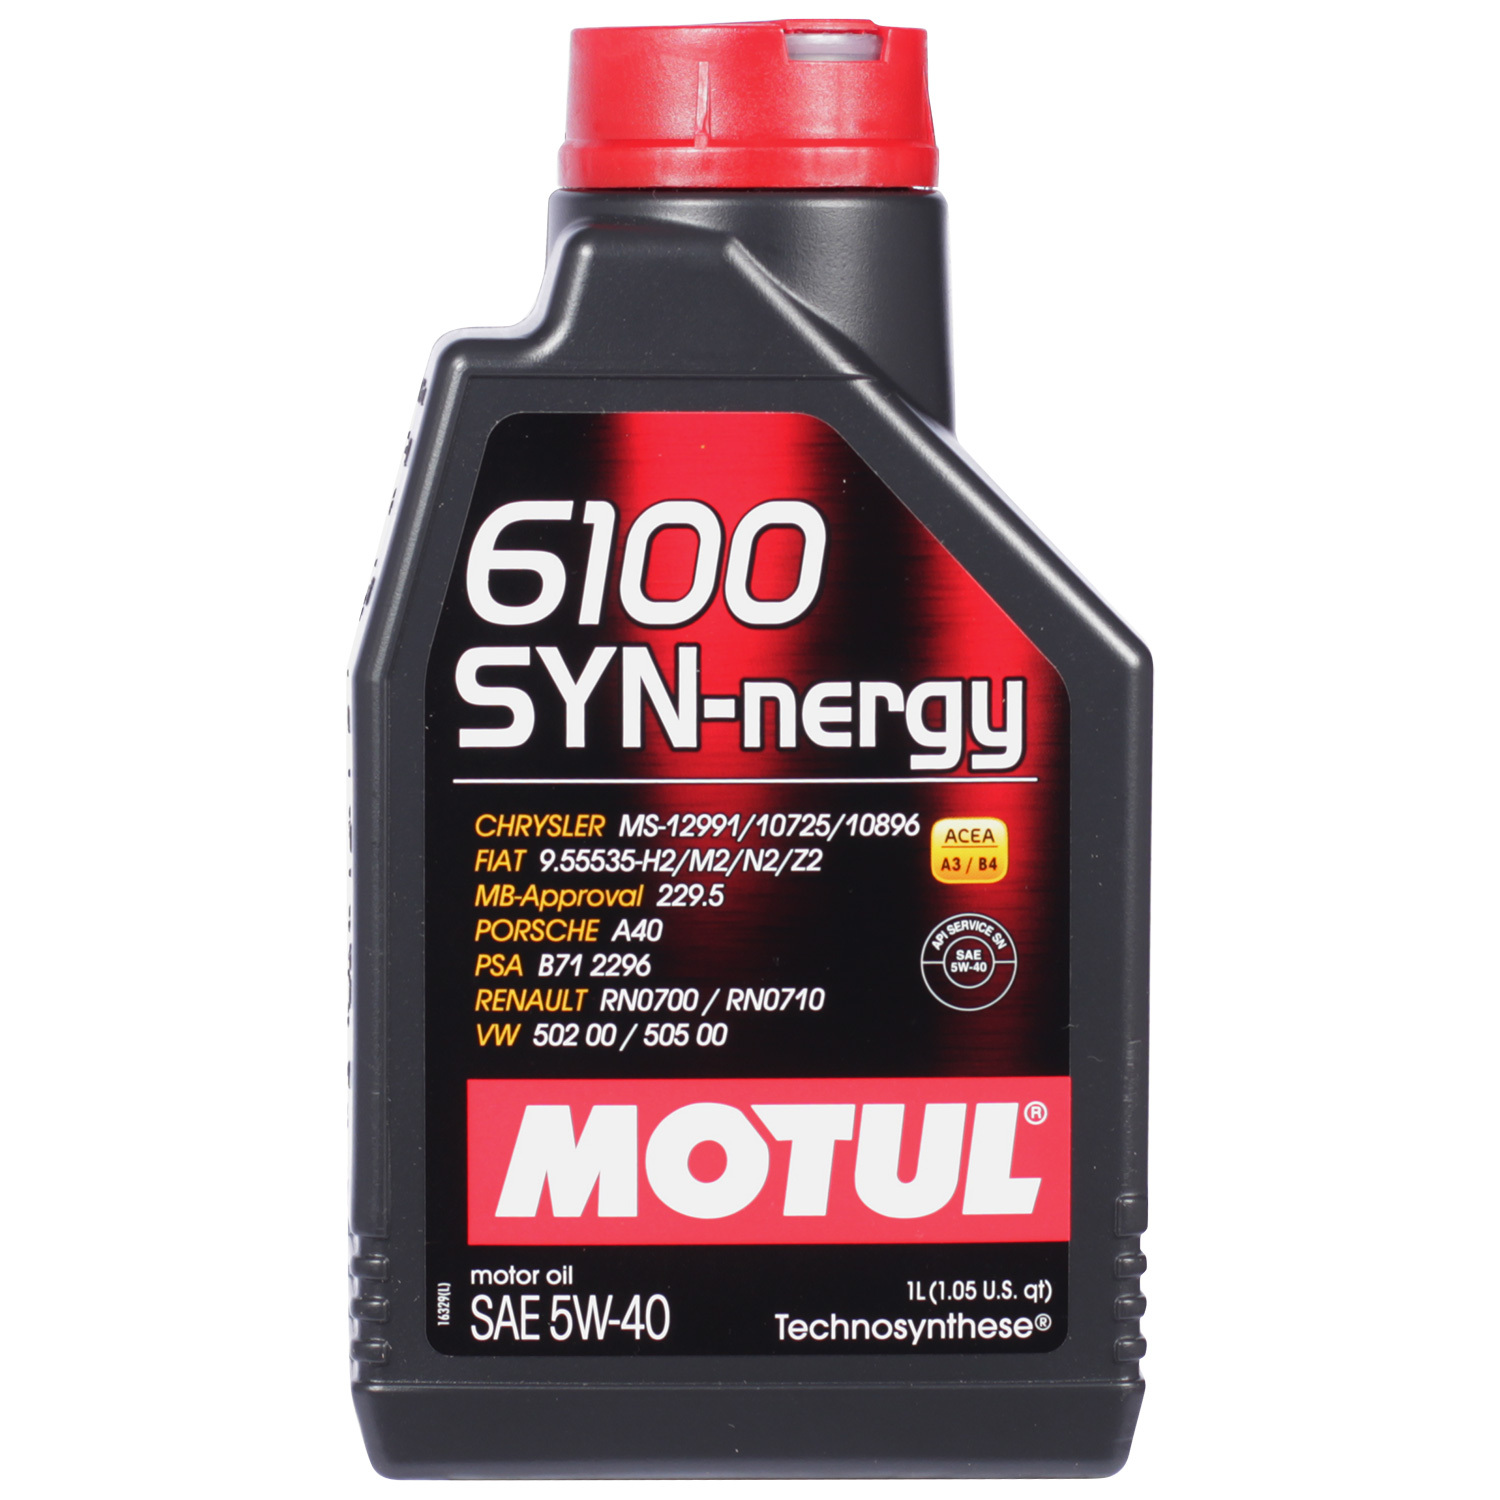 Motul Моторное масло Motul 6100 SYN-NERGY 5W-40, 1 л масло моторное синтетическое motul motul 8100x clean 1l